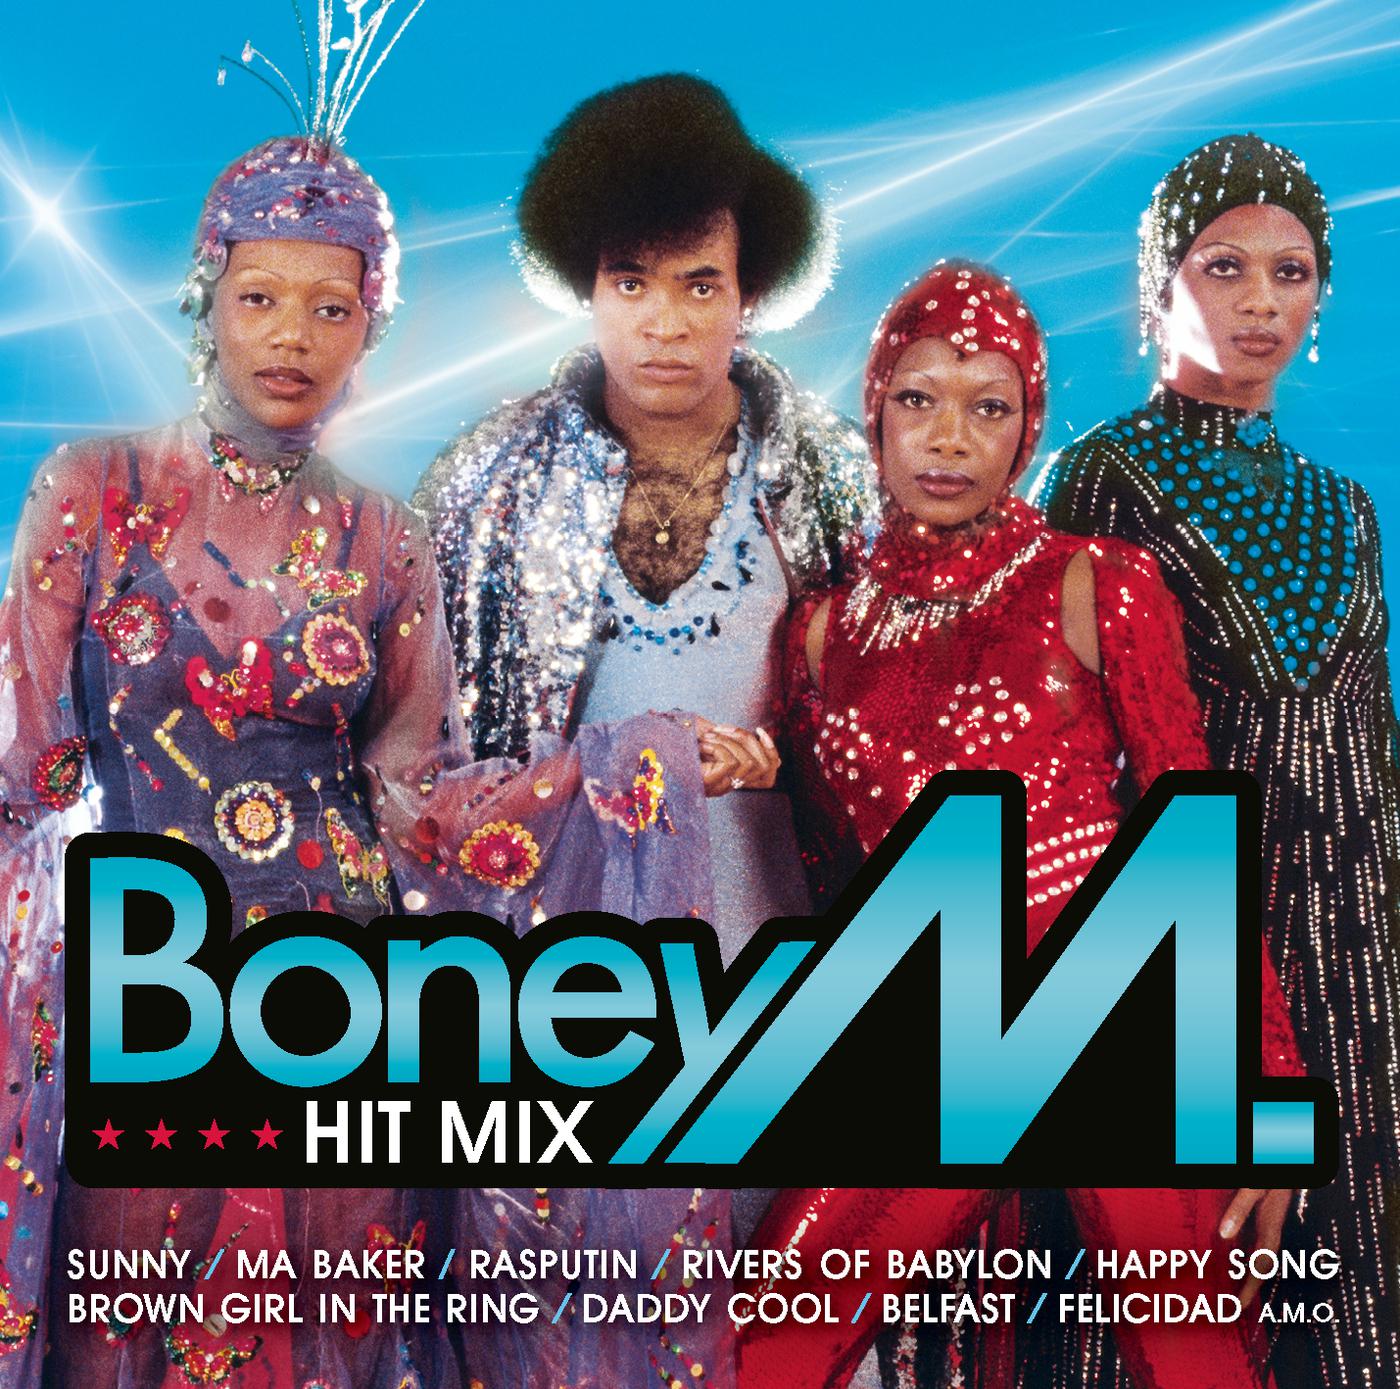 Boney m на русском. Группа Бони м. Группа Boney m. в 80. Состав группы Бони м 1977. Boney m обложка.